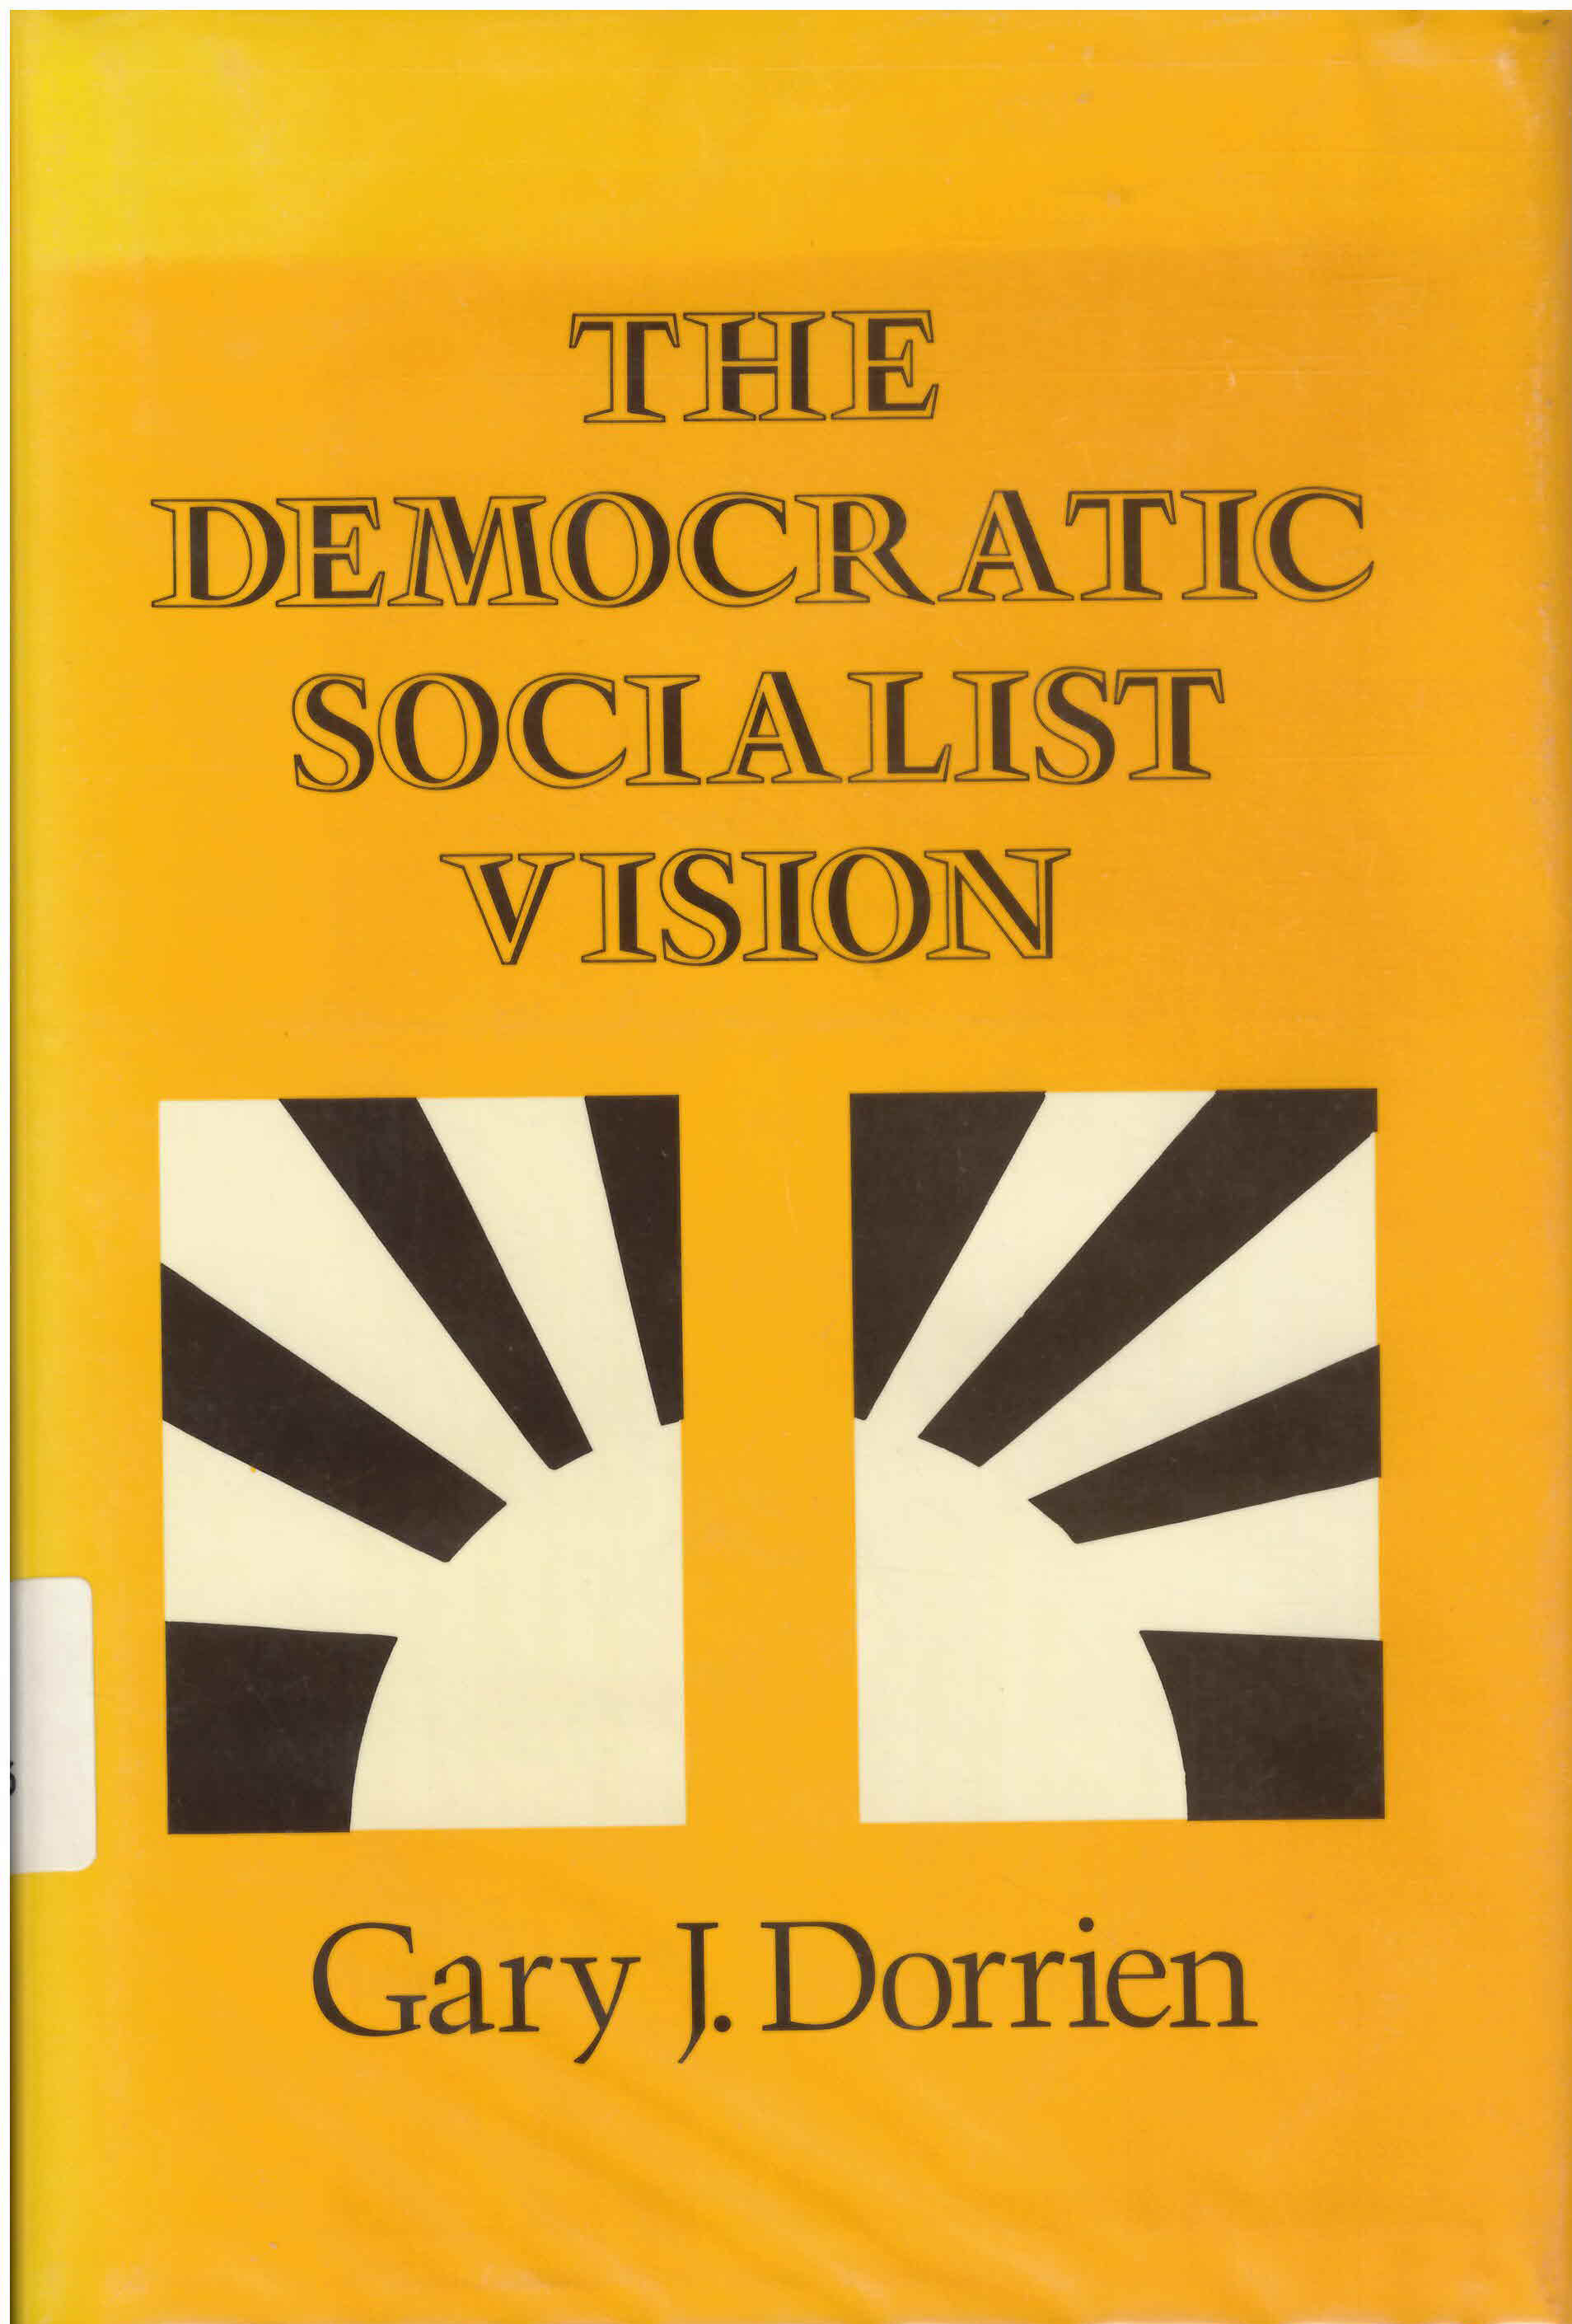 Democratic socialist vision